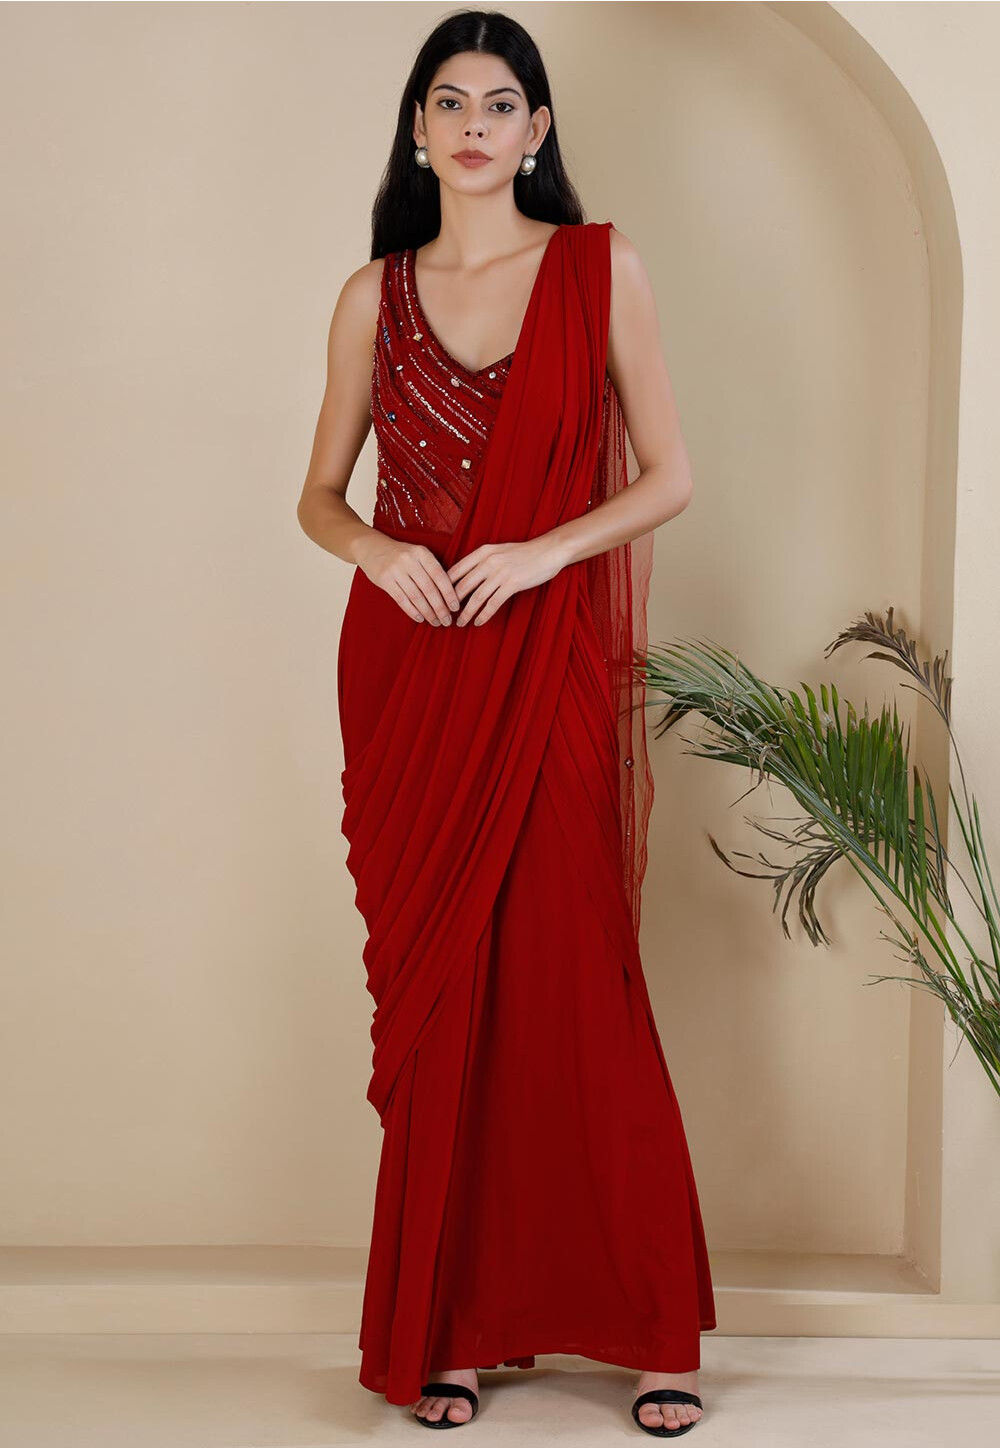 Red And White Silk Sari Saree Indian Ethnic Party Wedding Wear Lehenga Dress  | eBay